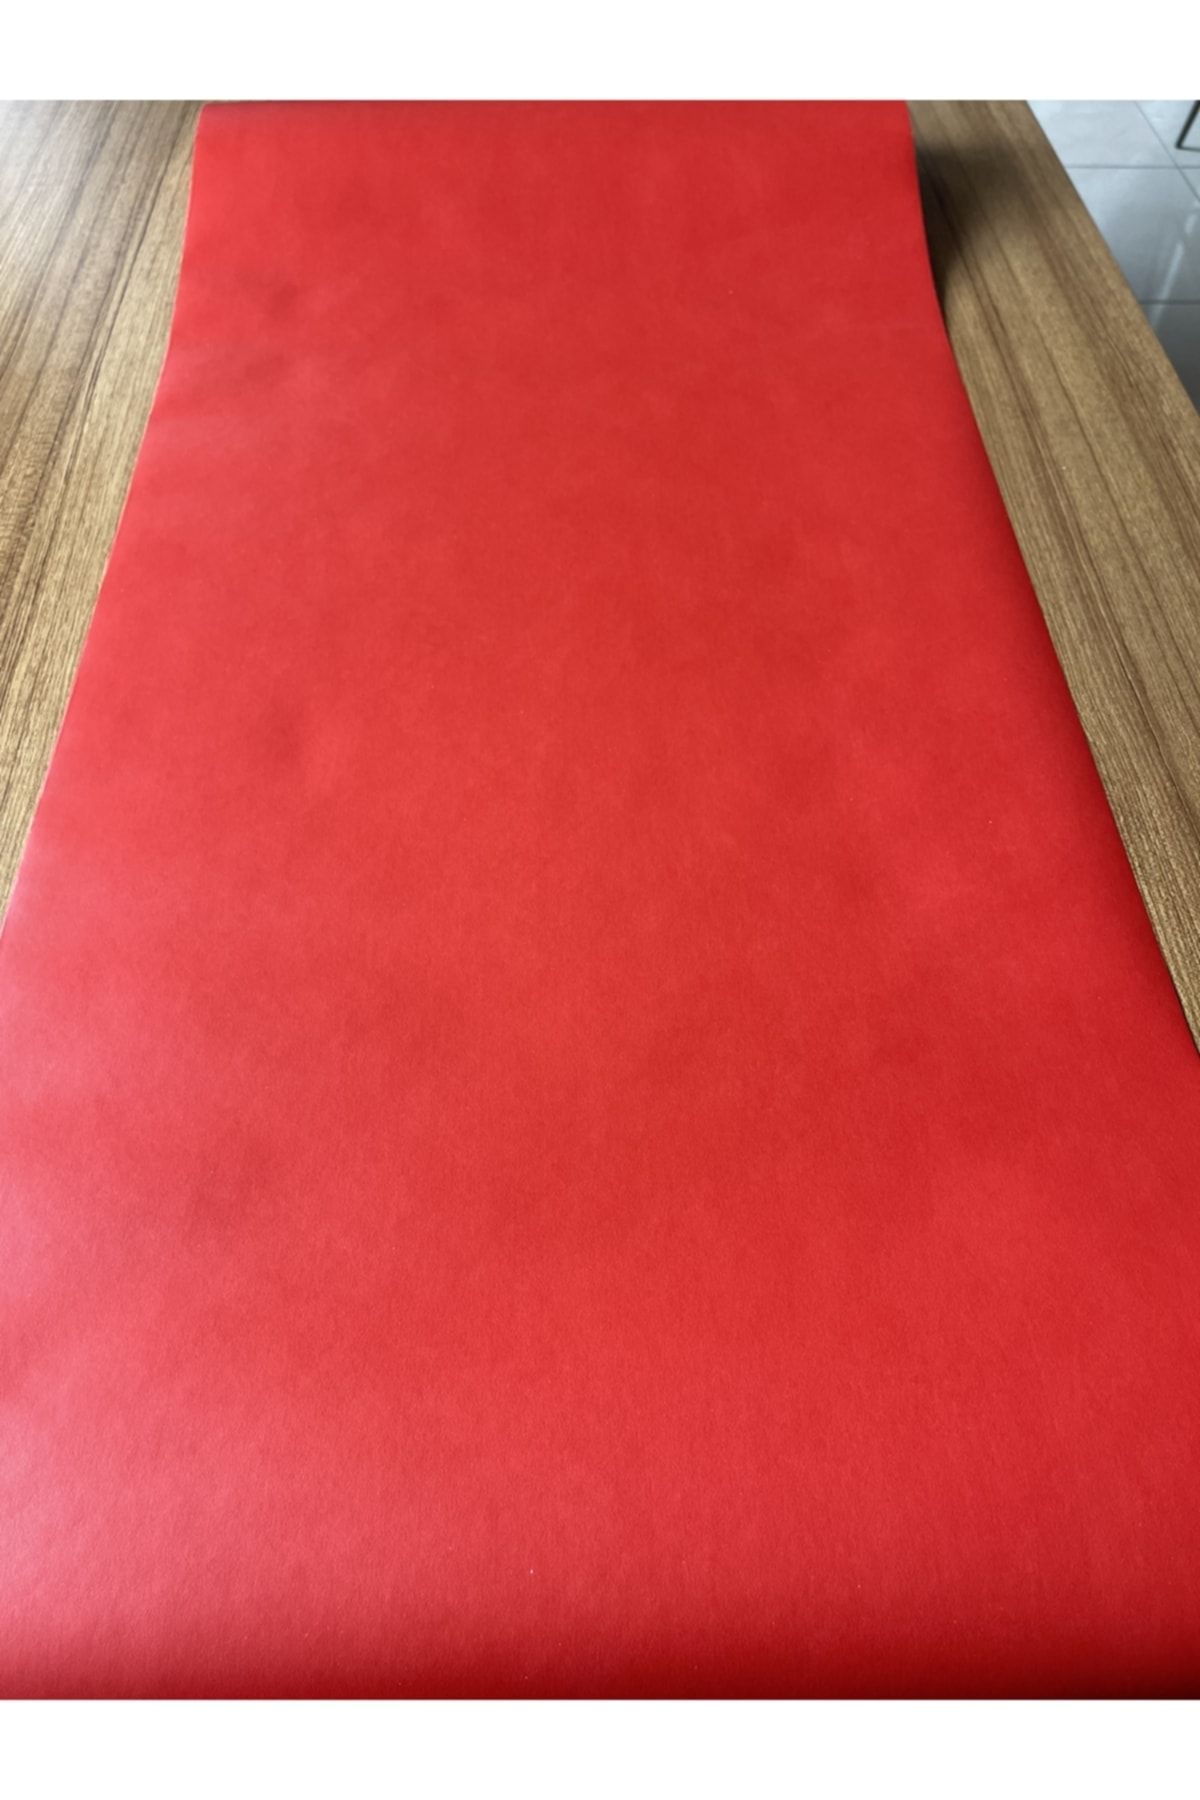 BAŞYAPI DİZAYN Kırmızı Ithal Duvar Kağıdı (5m²)